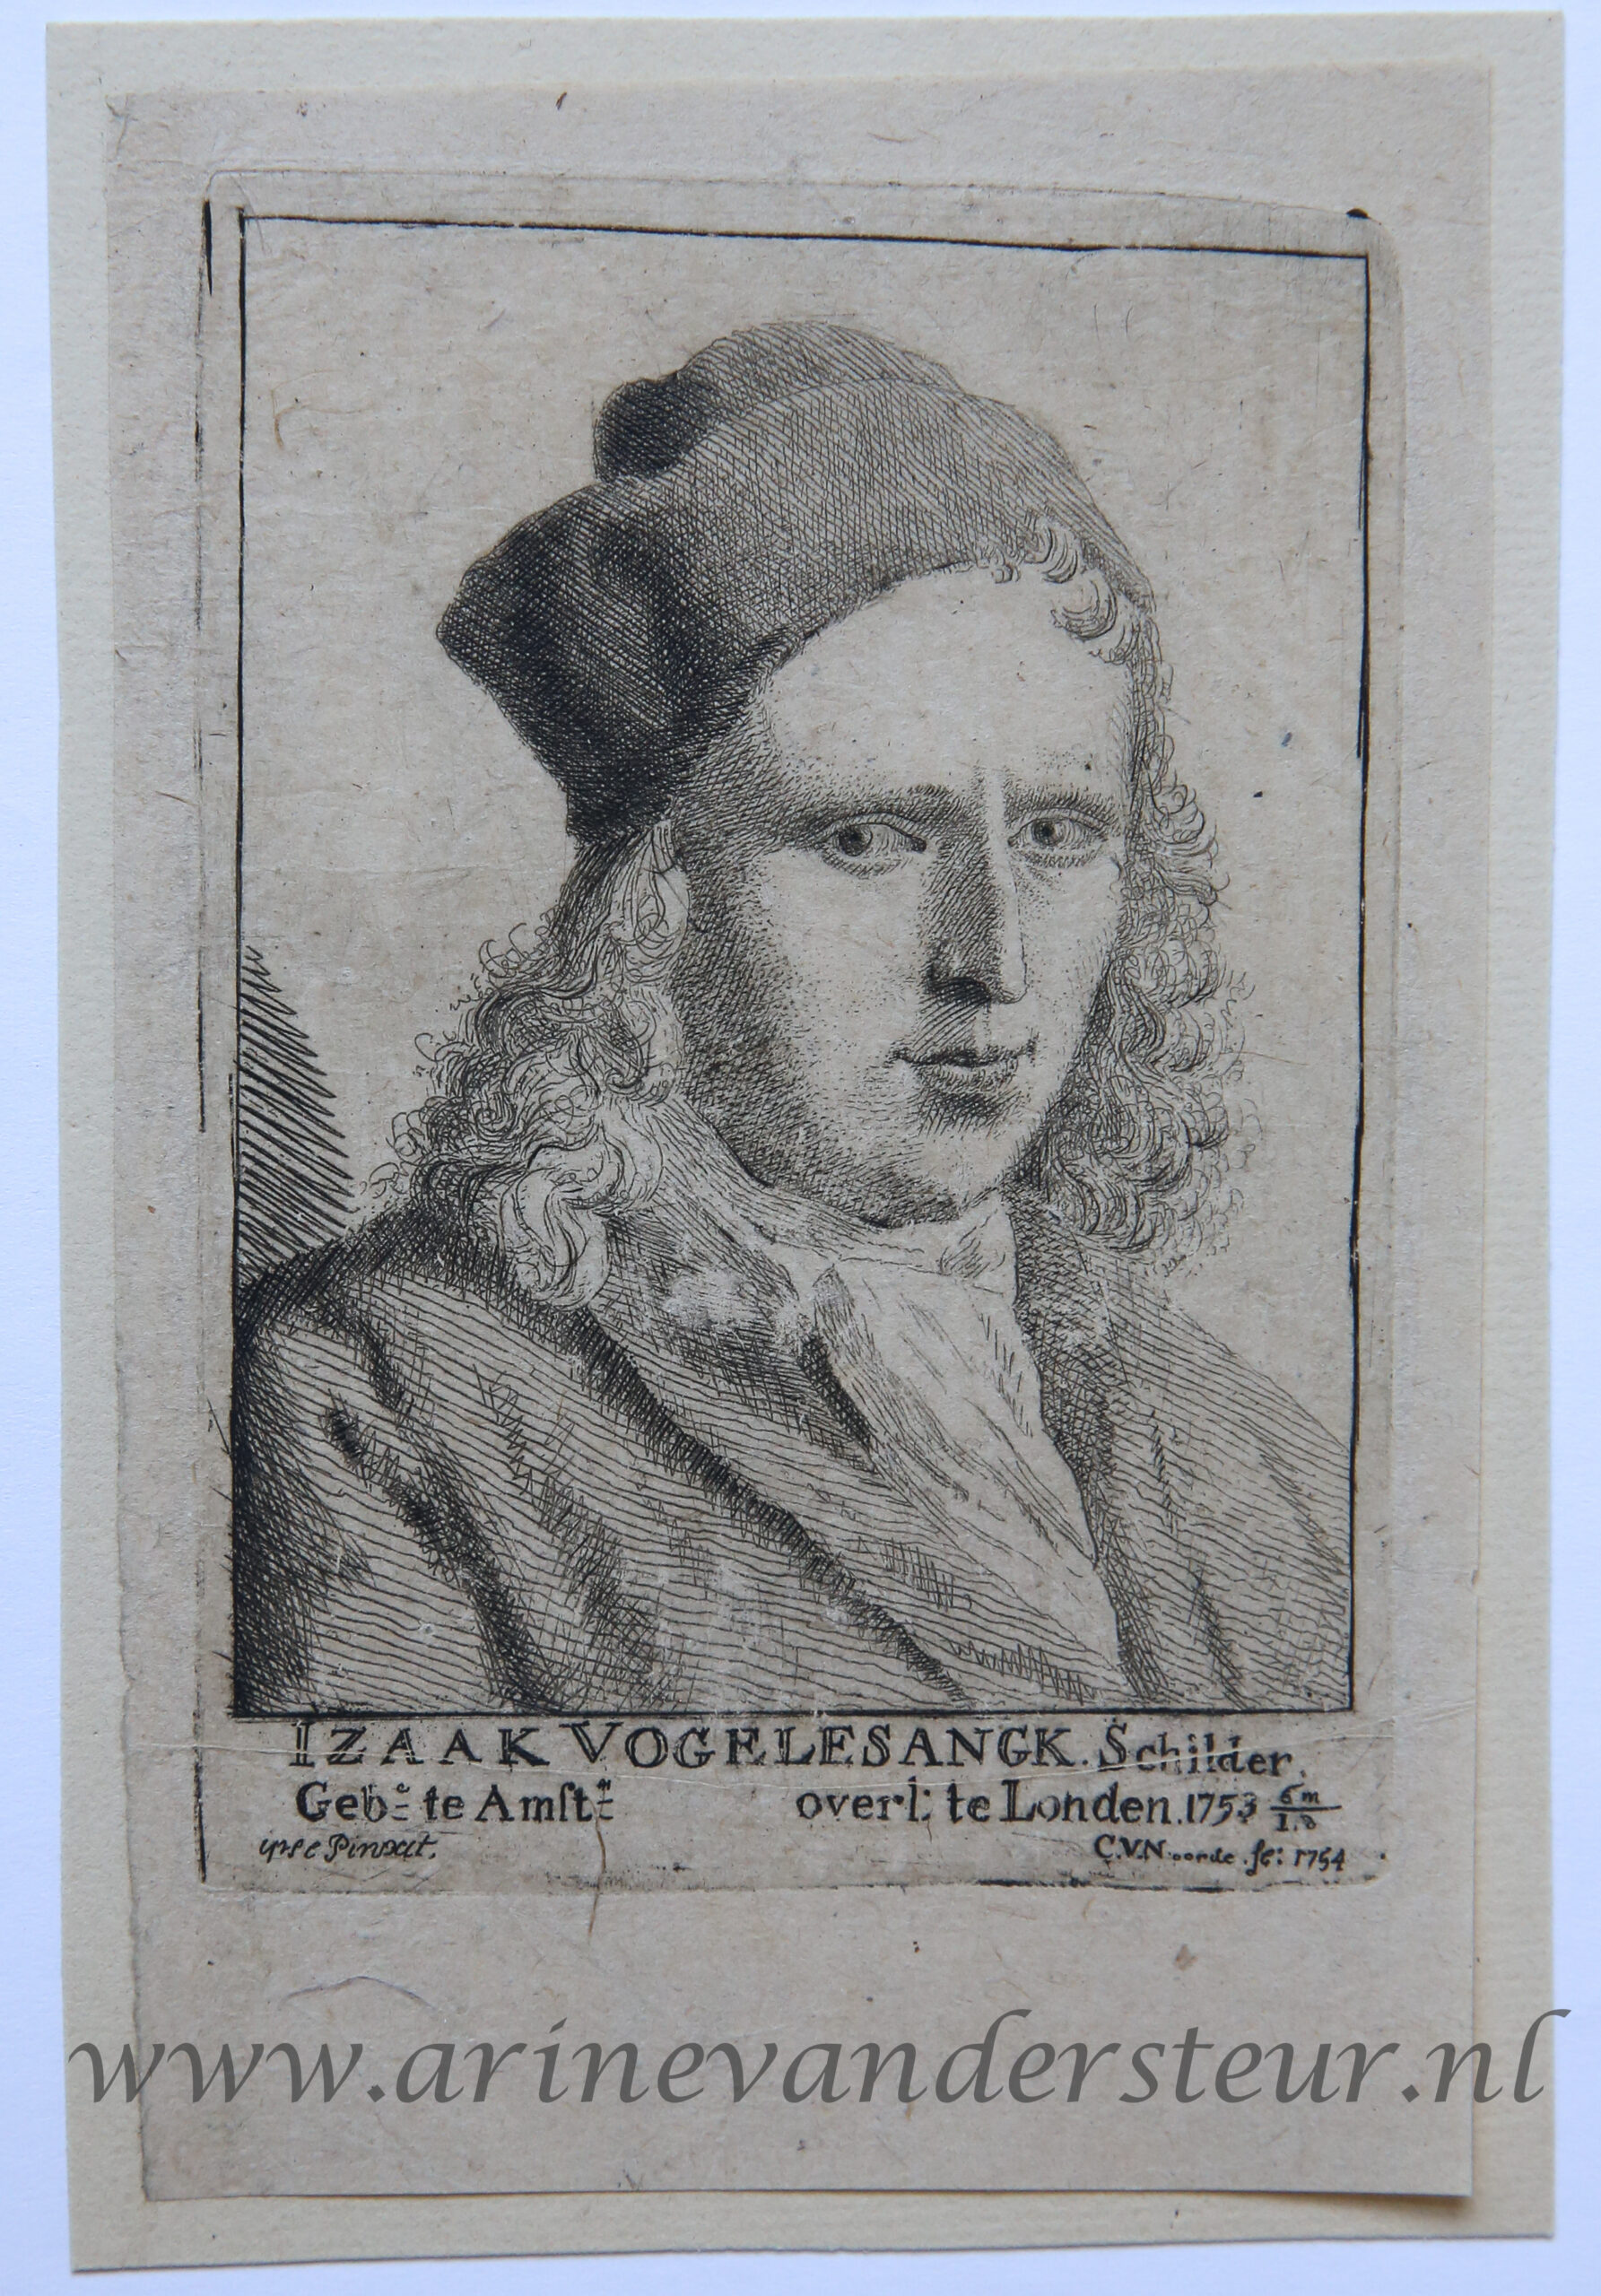 [Antique print, etching] Portrait of painter (kunstschilder) Izaak Vogelesangk, published 1754.